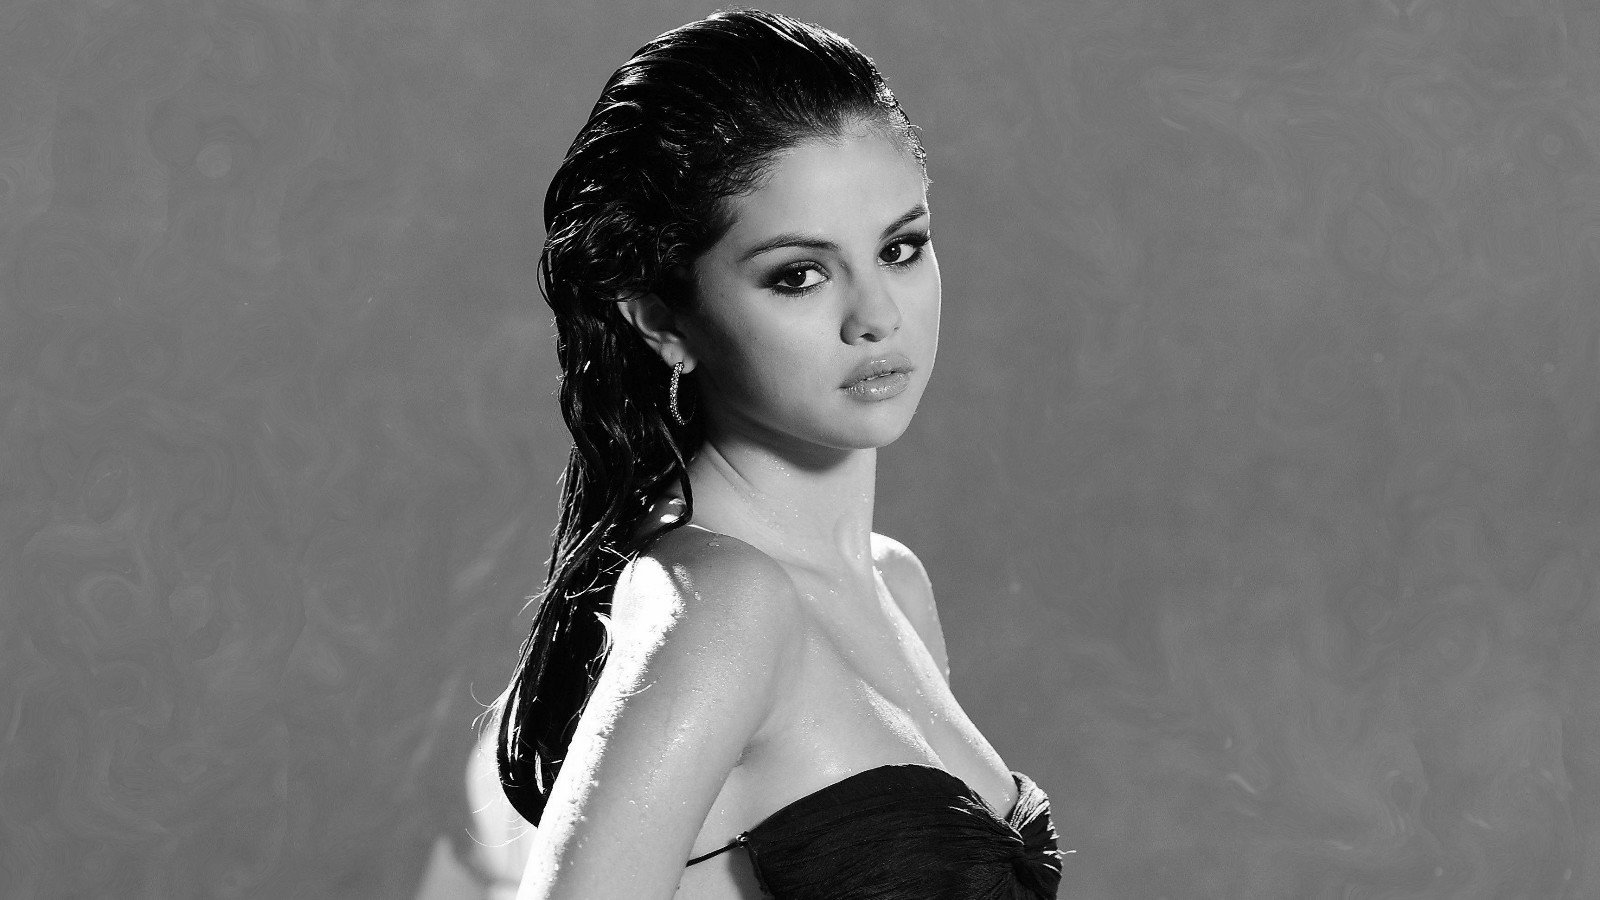 Free download Selena Gomez wallpaper ID:7884 hd 1600x900 for desktop